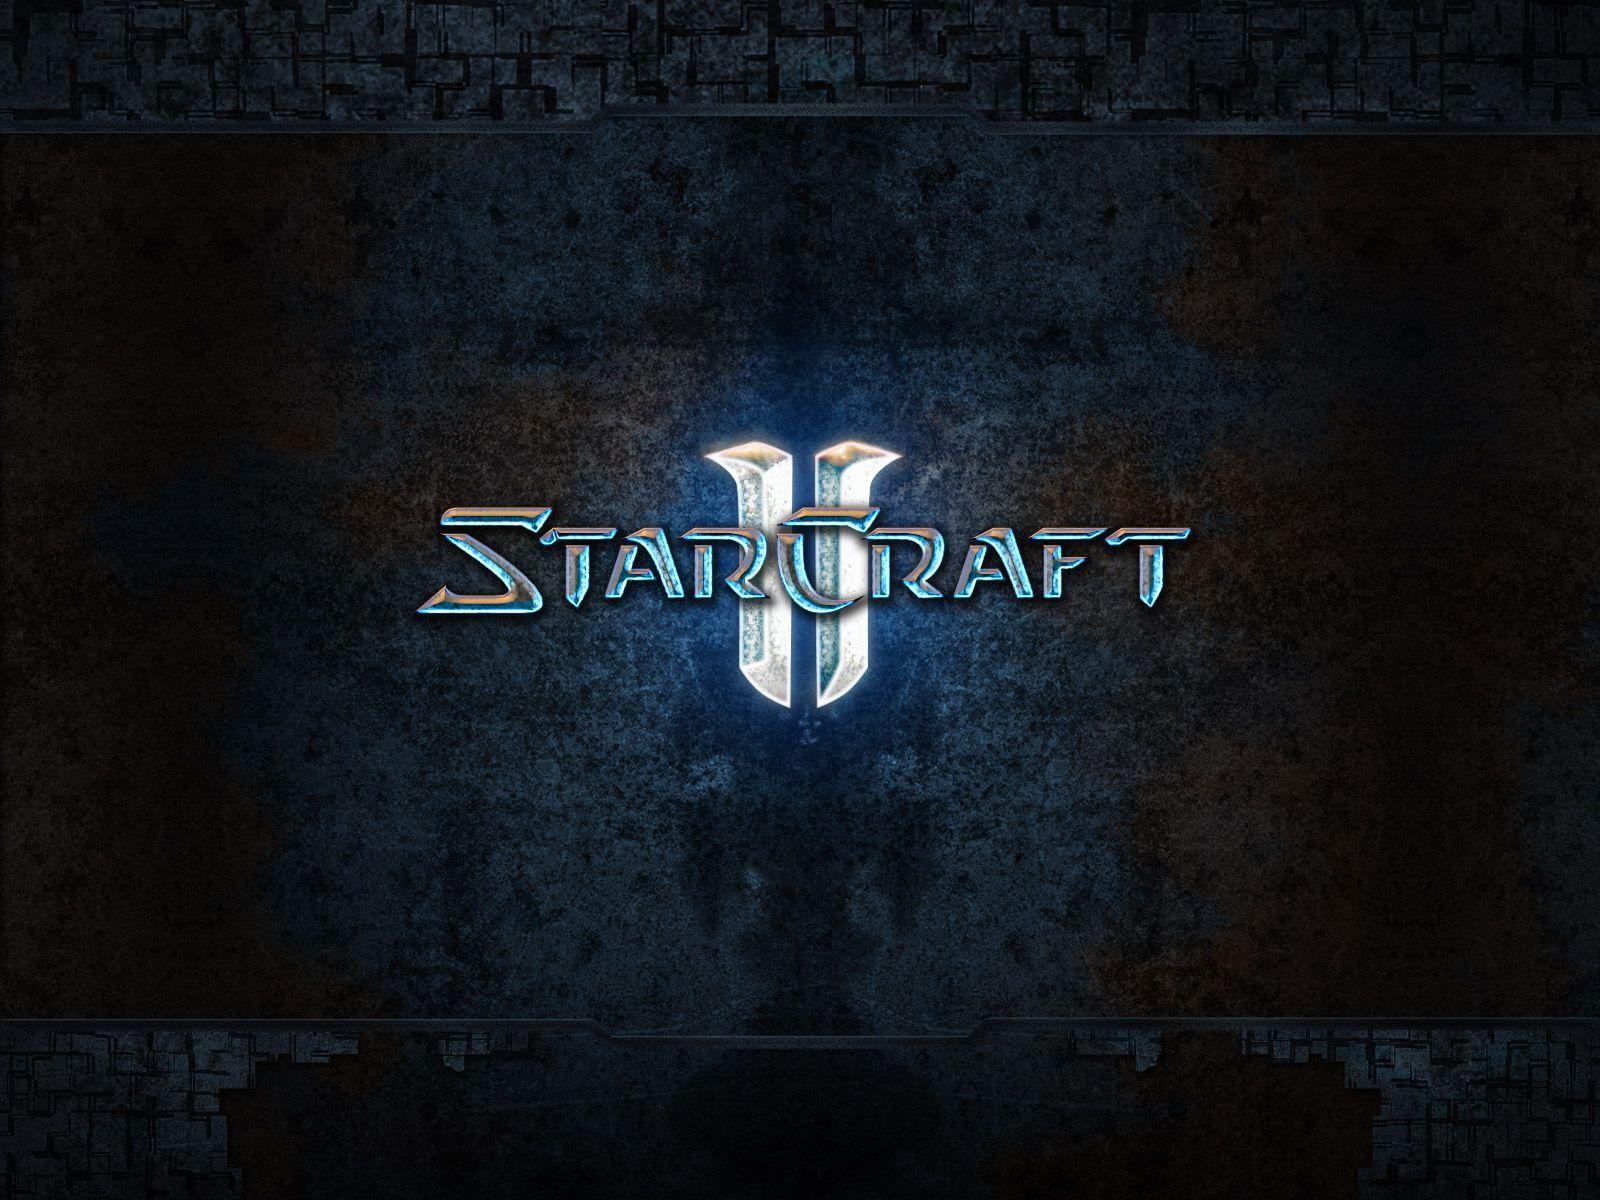 Starcraft 2 wallpaper design